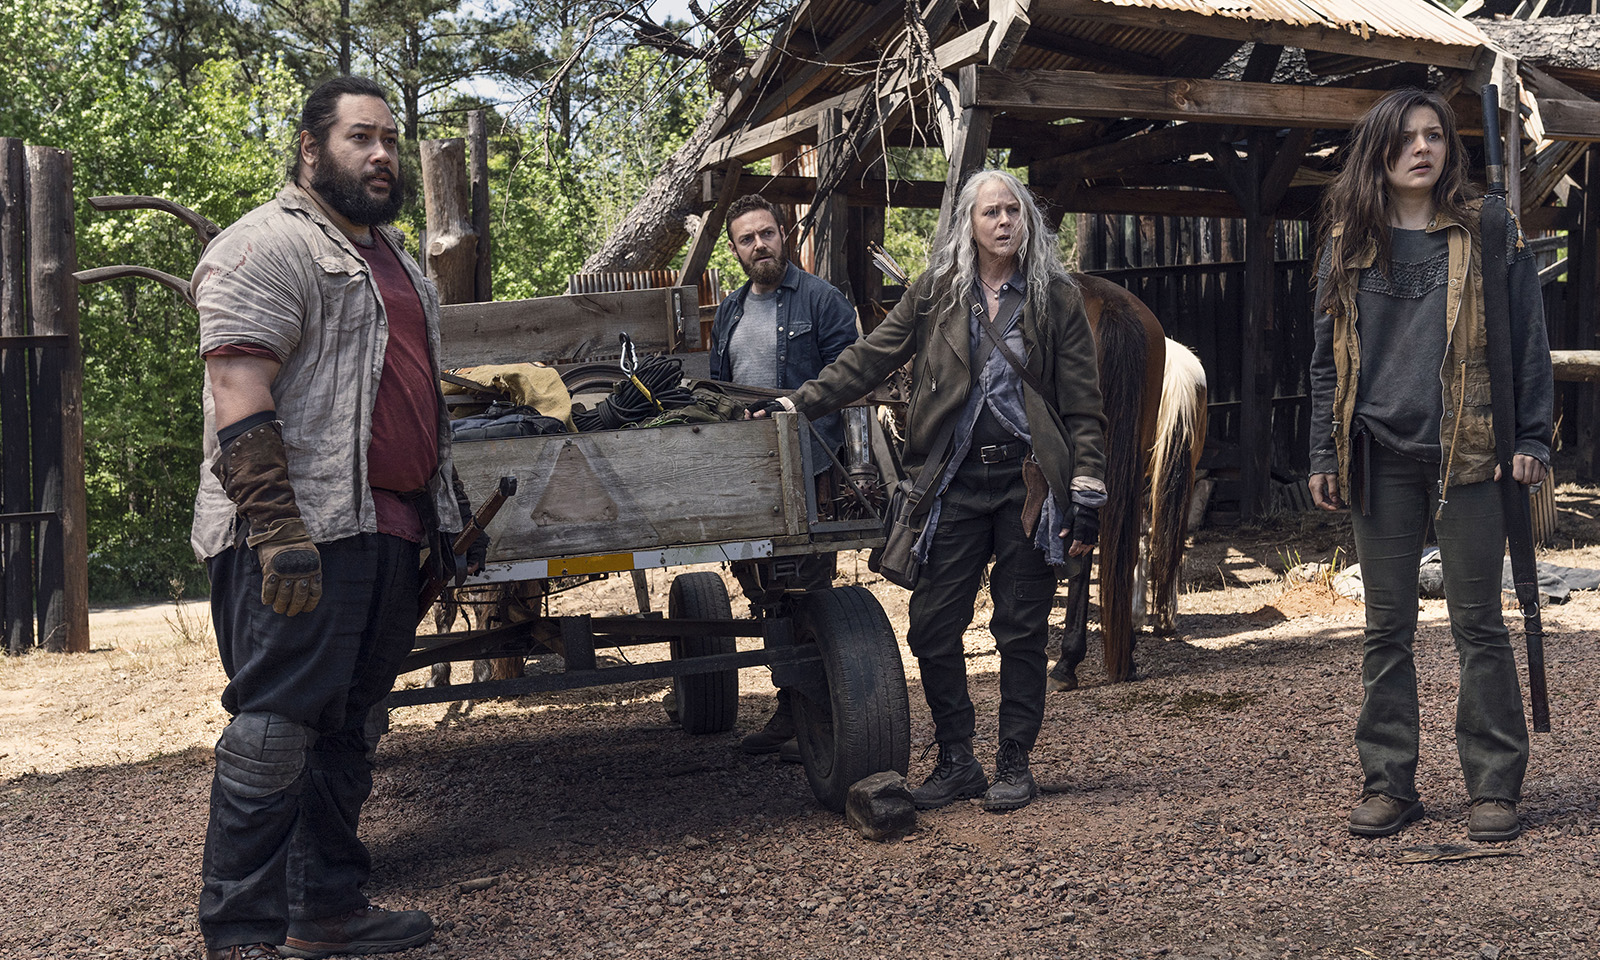 Jerry, Aaron, Carol e Lydia observando surpresos algo ou alguém no episódio 5 da 11ª temporada de The Walking Dead.